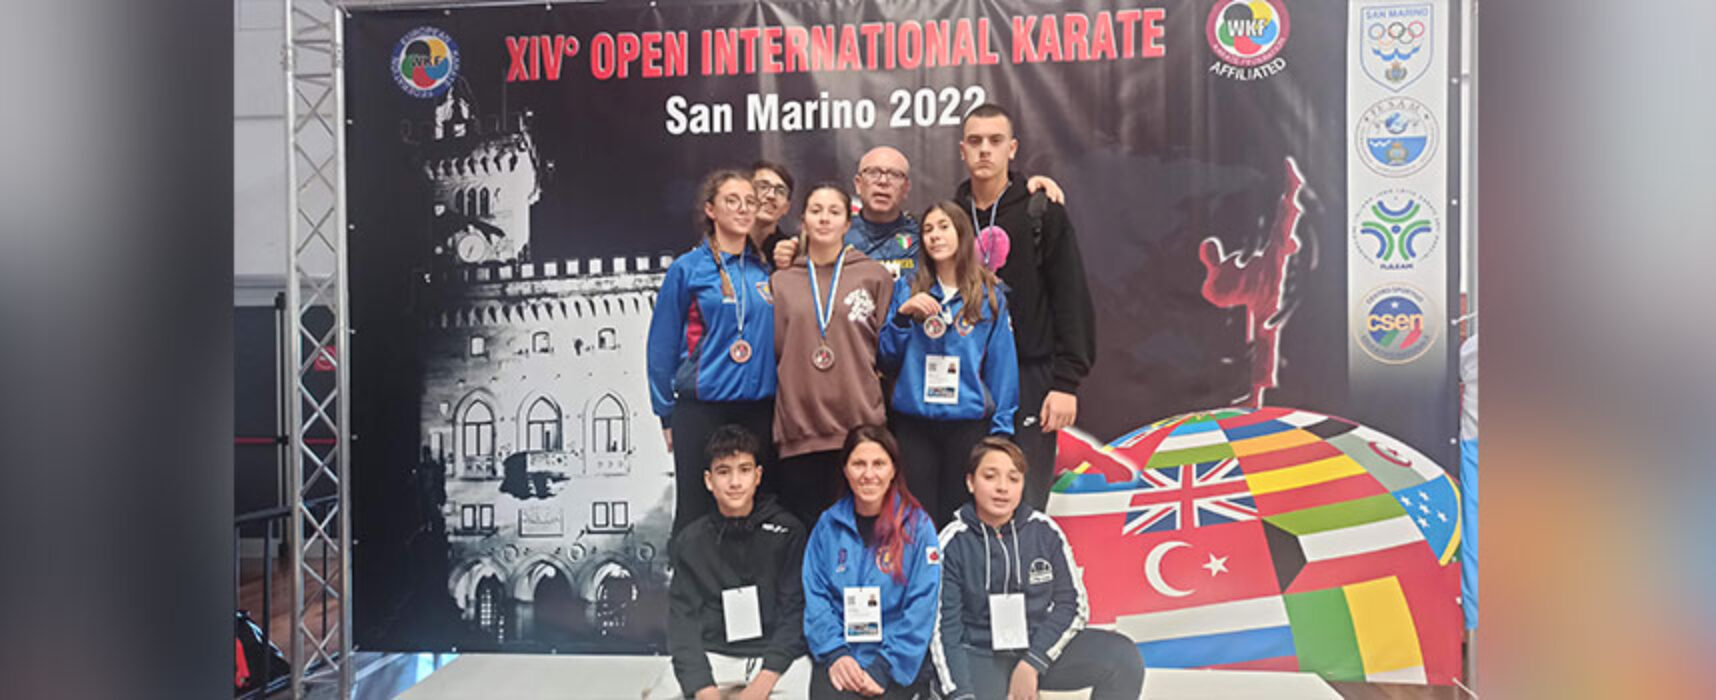 Karate, ottimi risultati a San Marino per il Gruppo Bersaglieri Bisceglie / FOTO